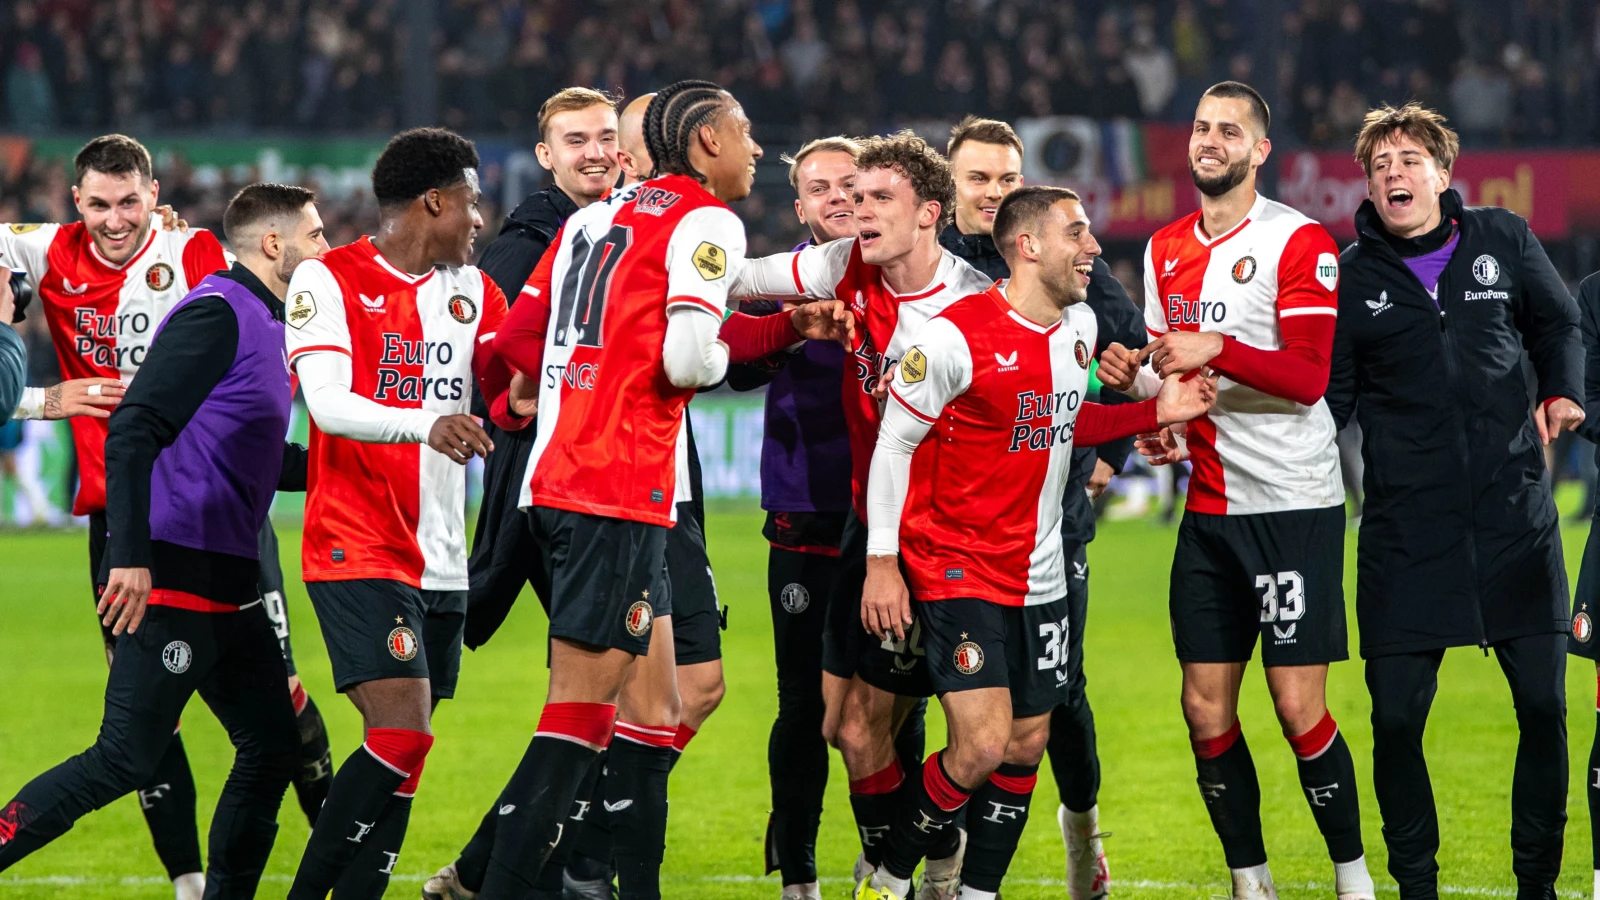 STORIES | Prachtige beelden van bekerwedstrijd tussen Feyenoord en PSV